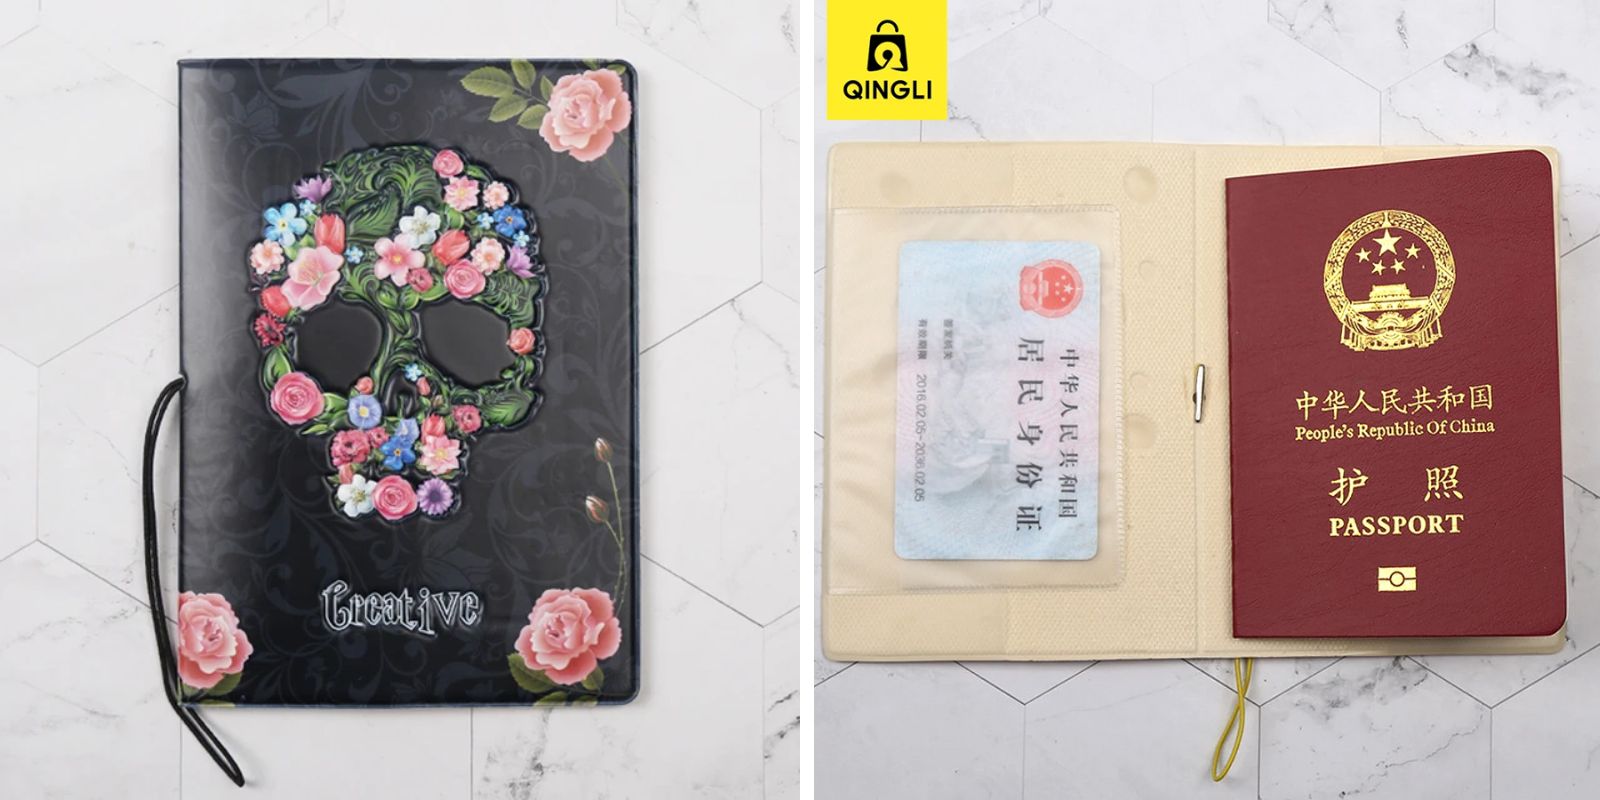 Обложка на паспорт с черепом и цветами